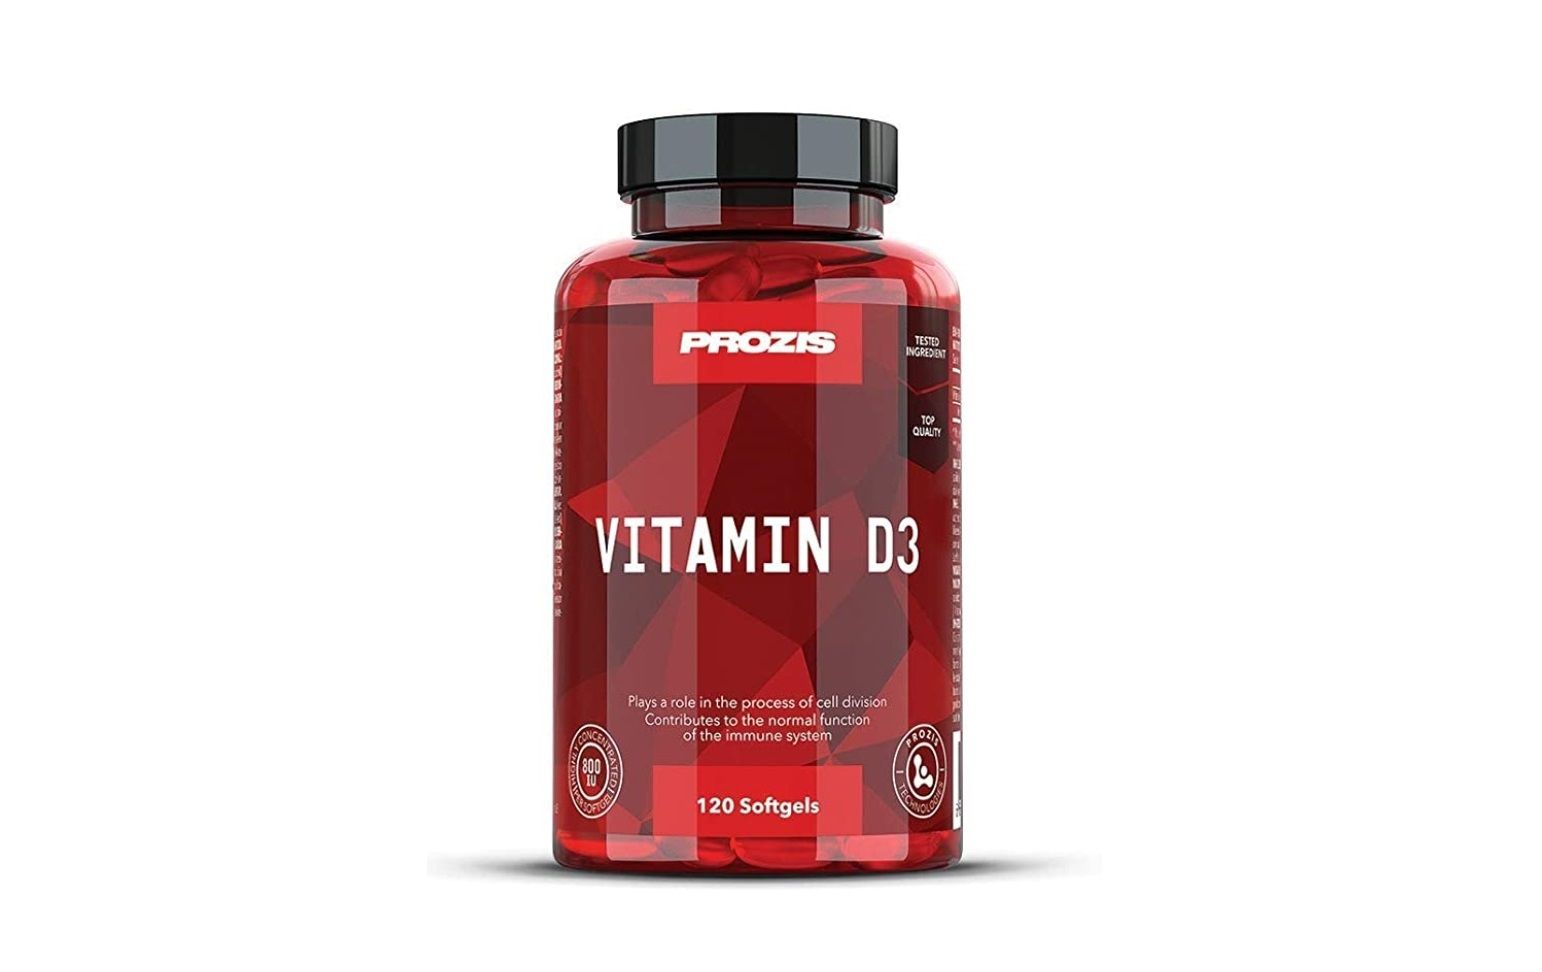 ¡Descuentazo! 120 cápsulas de Prozis Vitamina D3 por sólo 7,13€ (antes 17,99€)